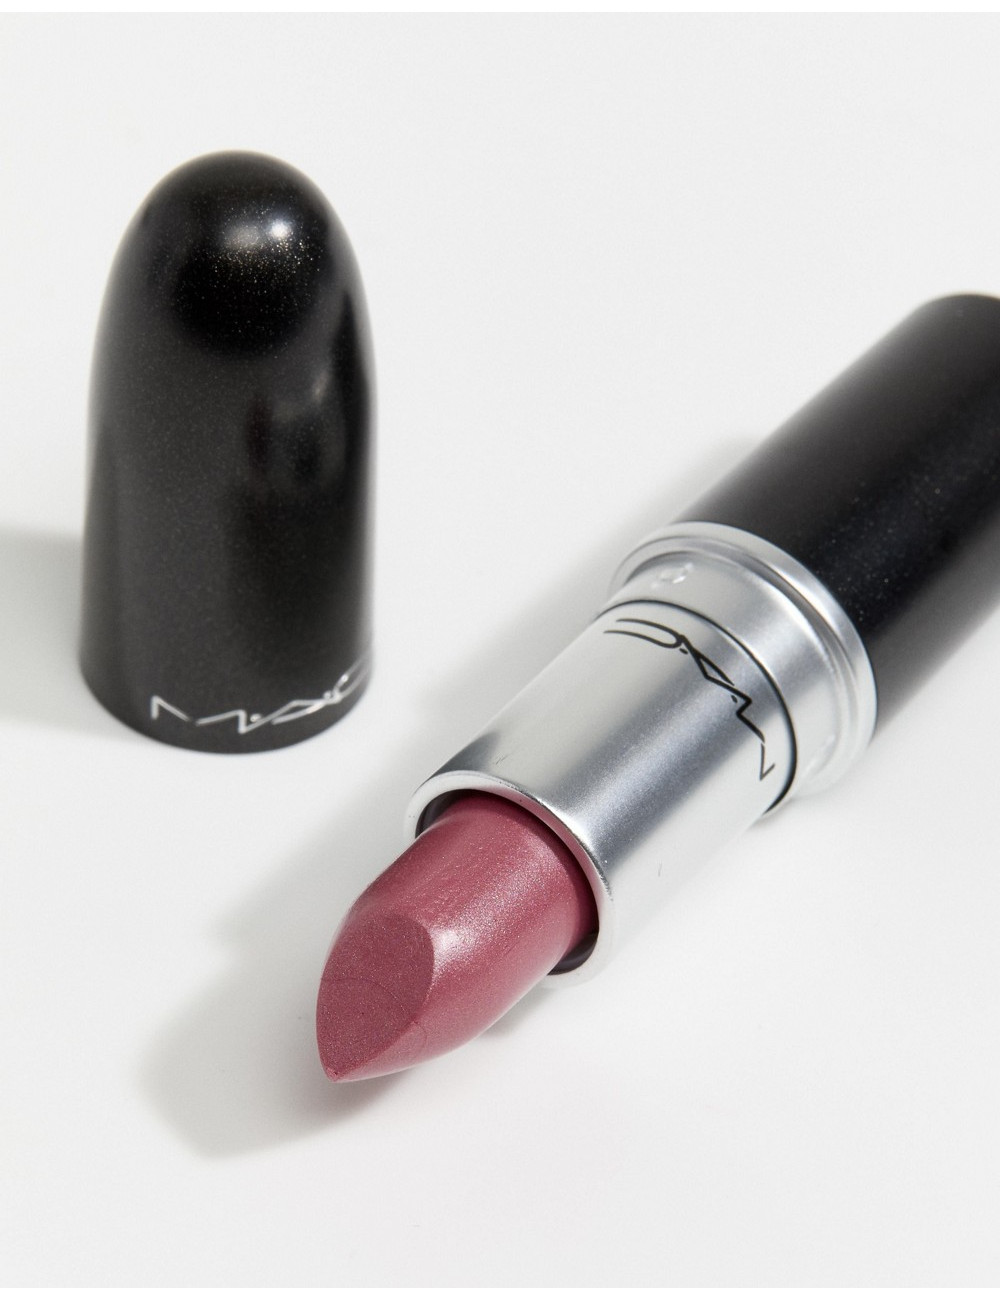 MAC Lustre Lipstick - Sweetie